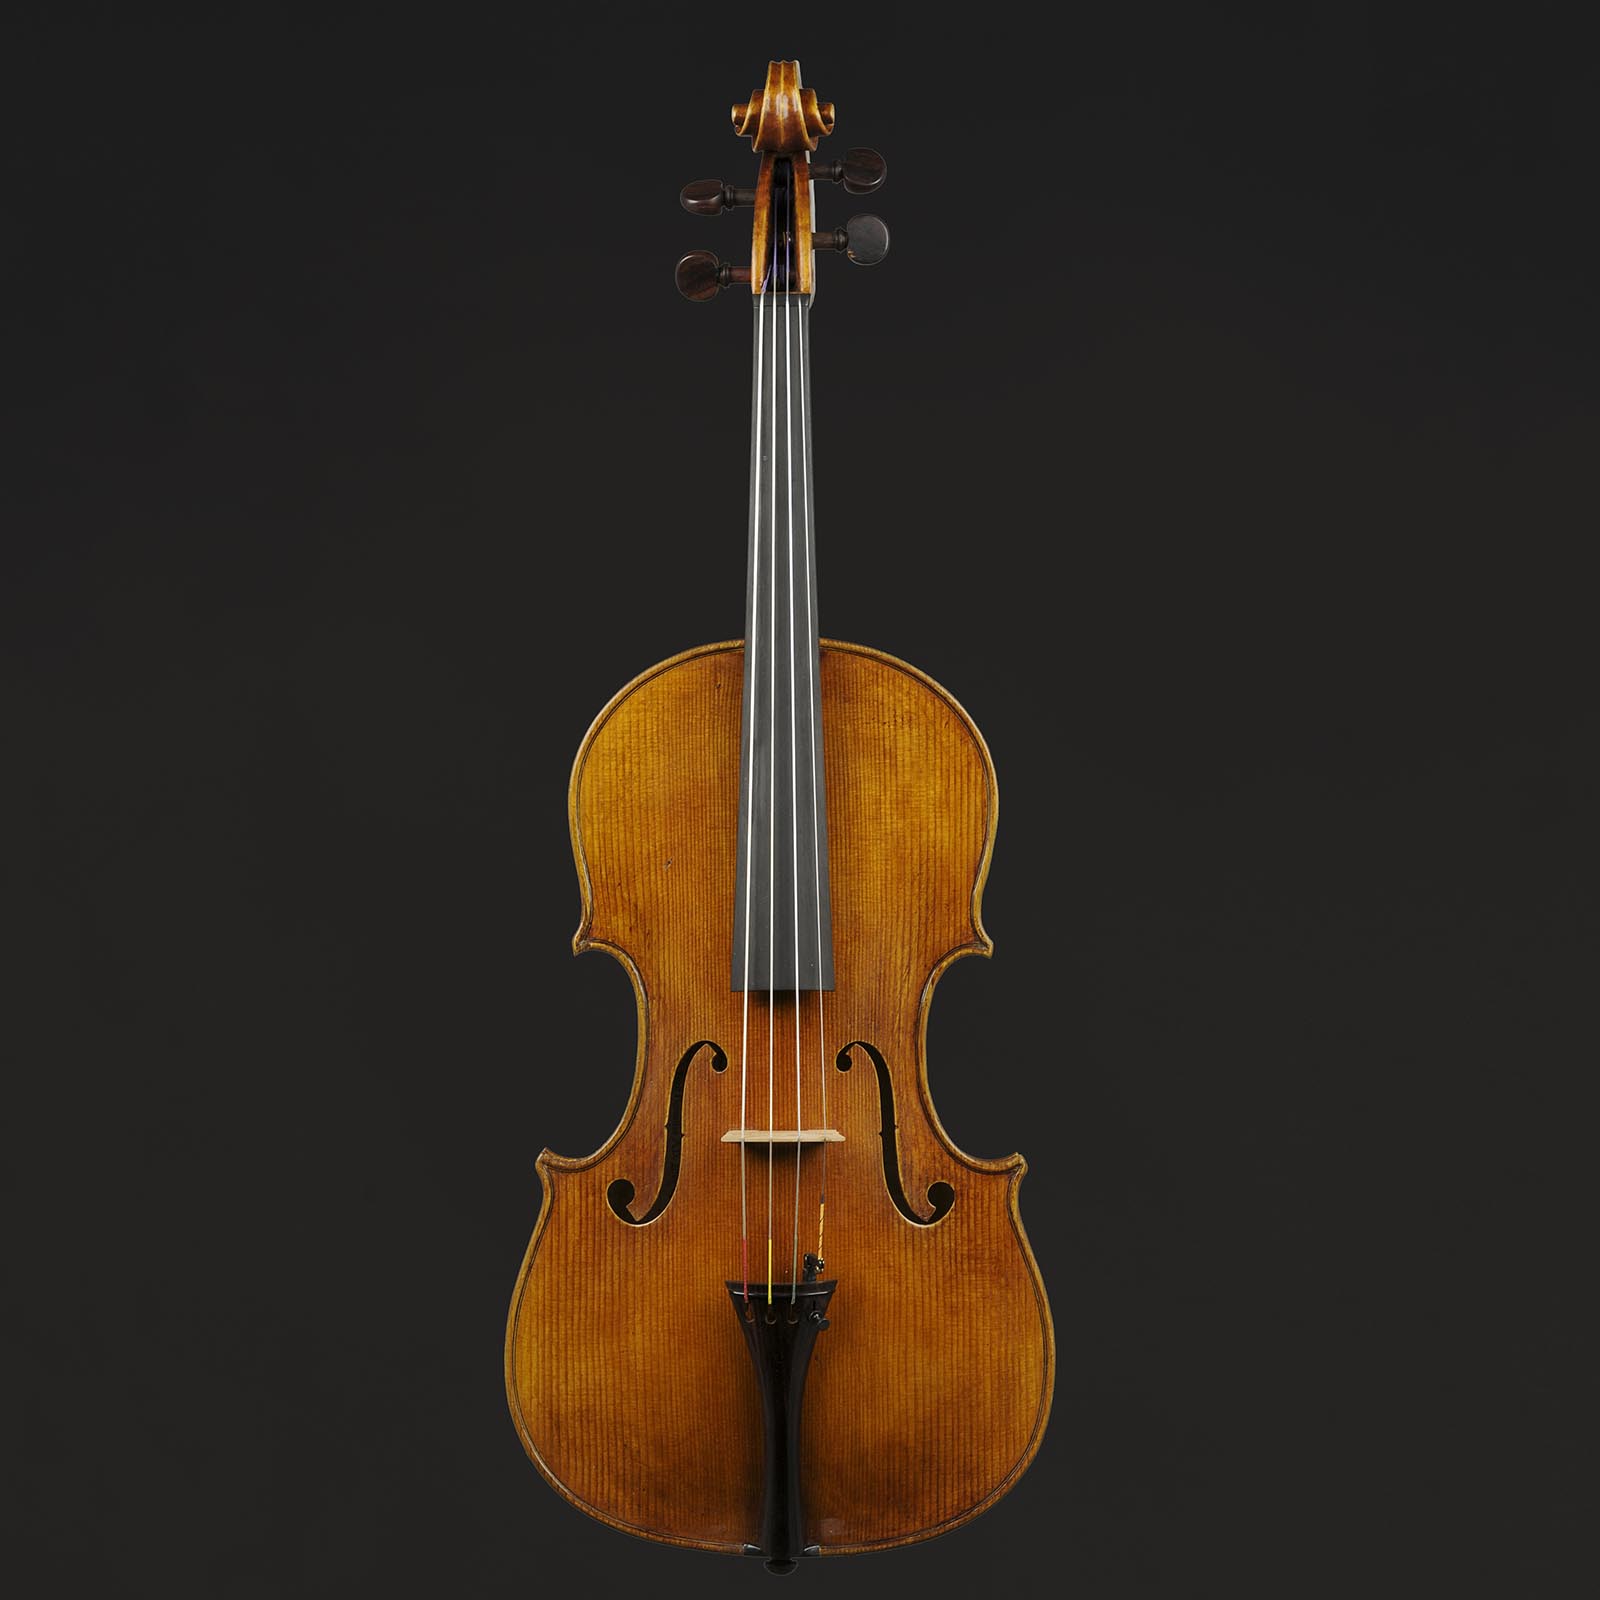 Antonio Stradivari Cremona 1672 “Tigre“ cm 42 - Image 1